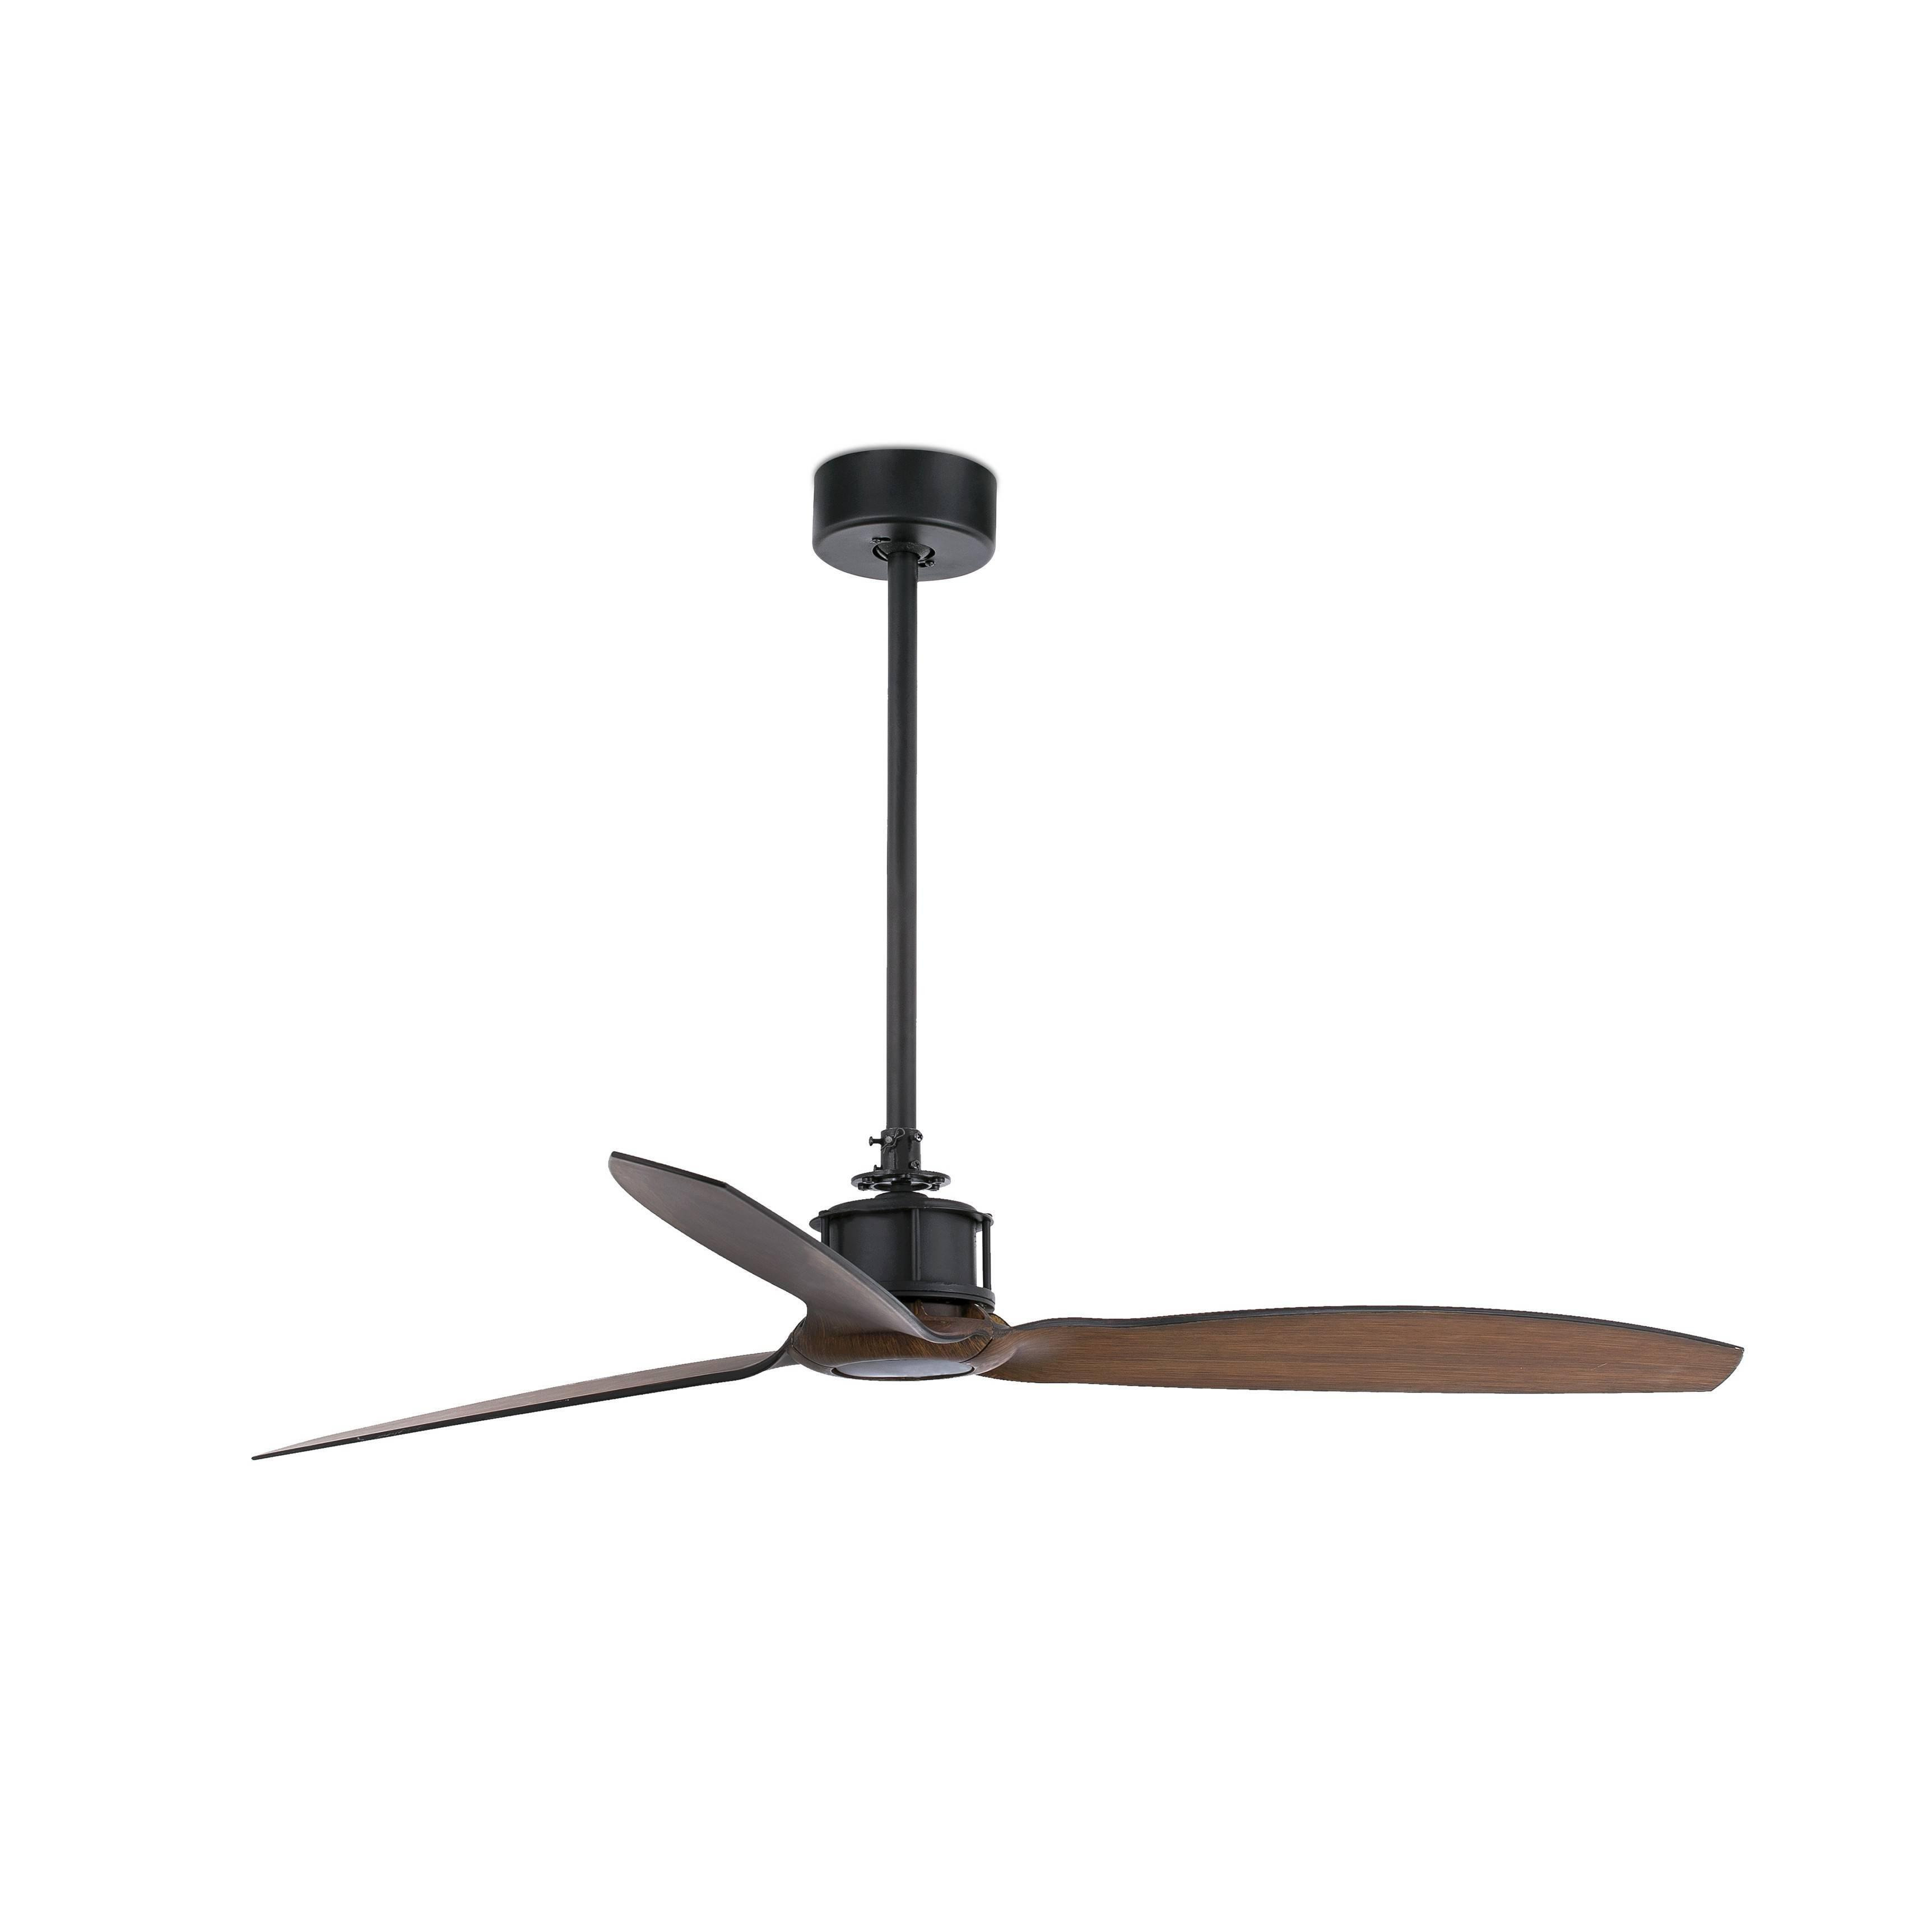 Just Medium Ceiling Fan Black Walnut Optional LED Light Sold Separately - image 1